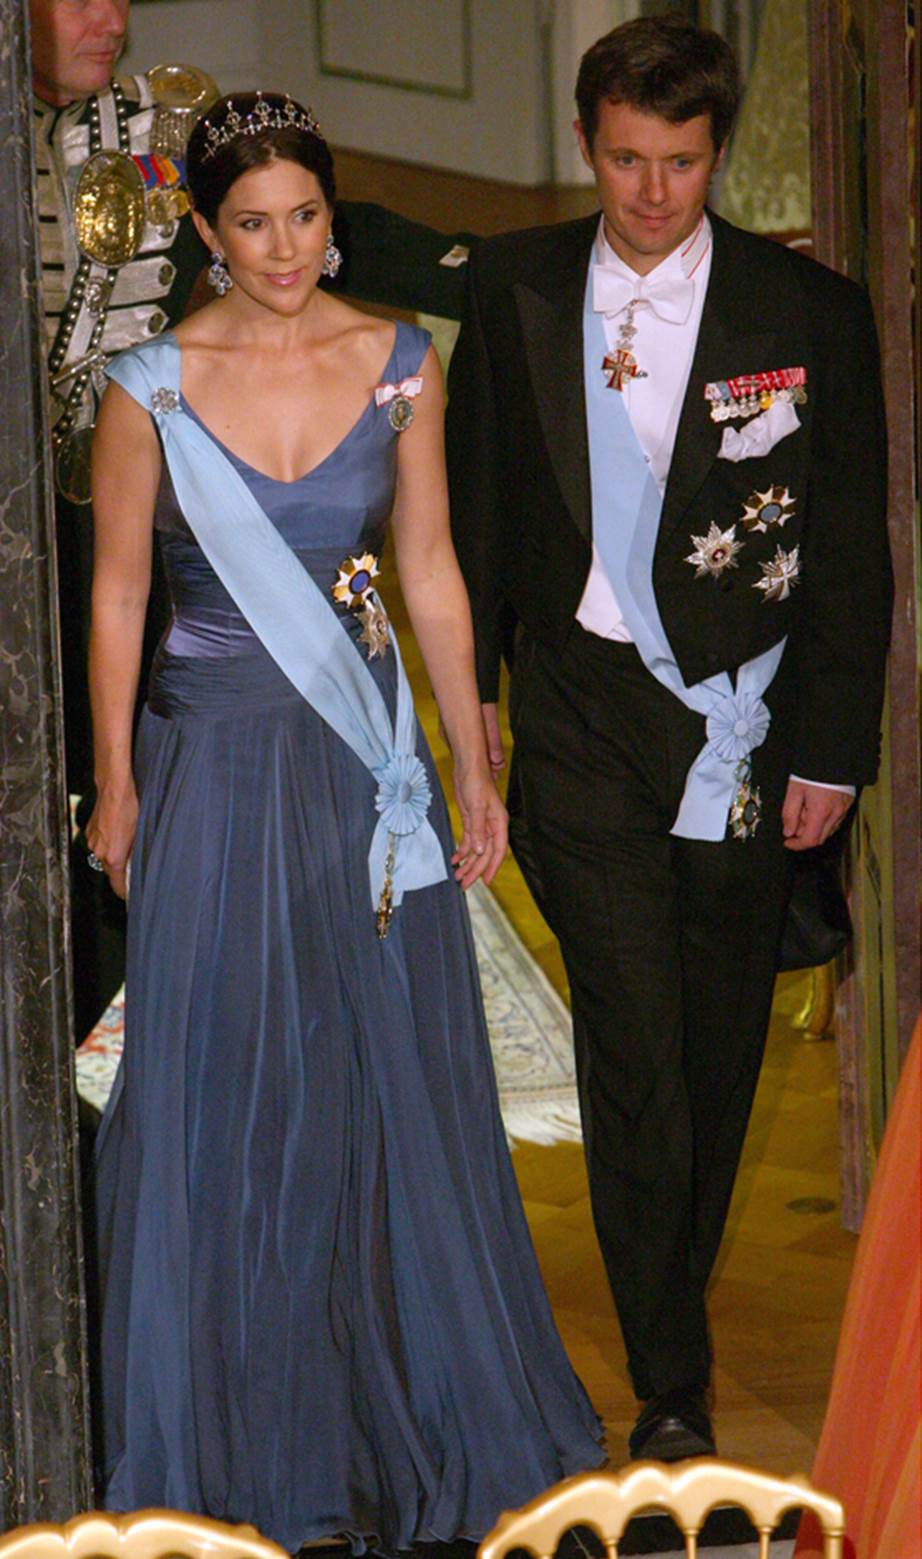 In her wedding tiara, in 2007.